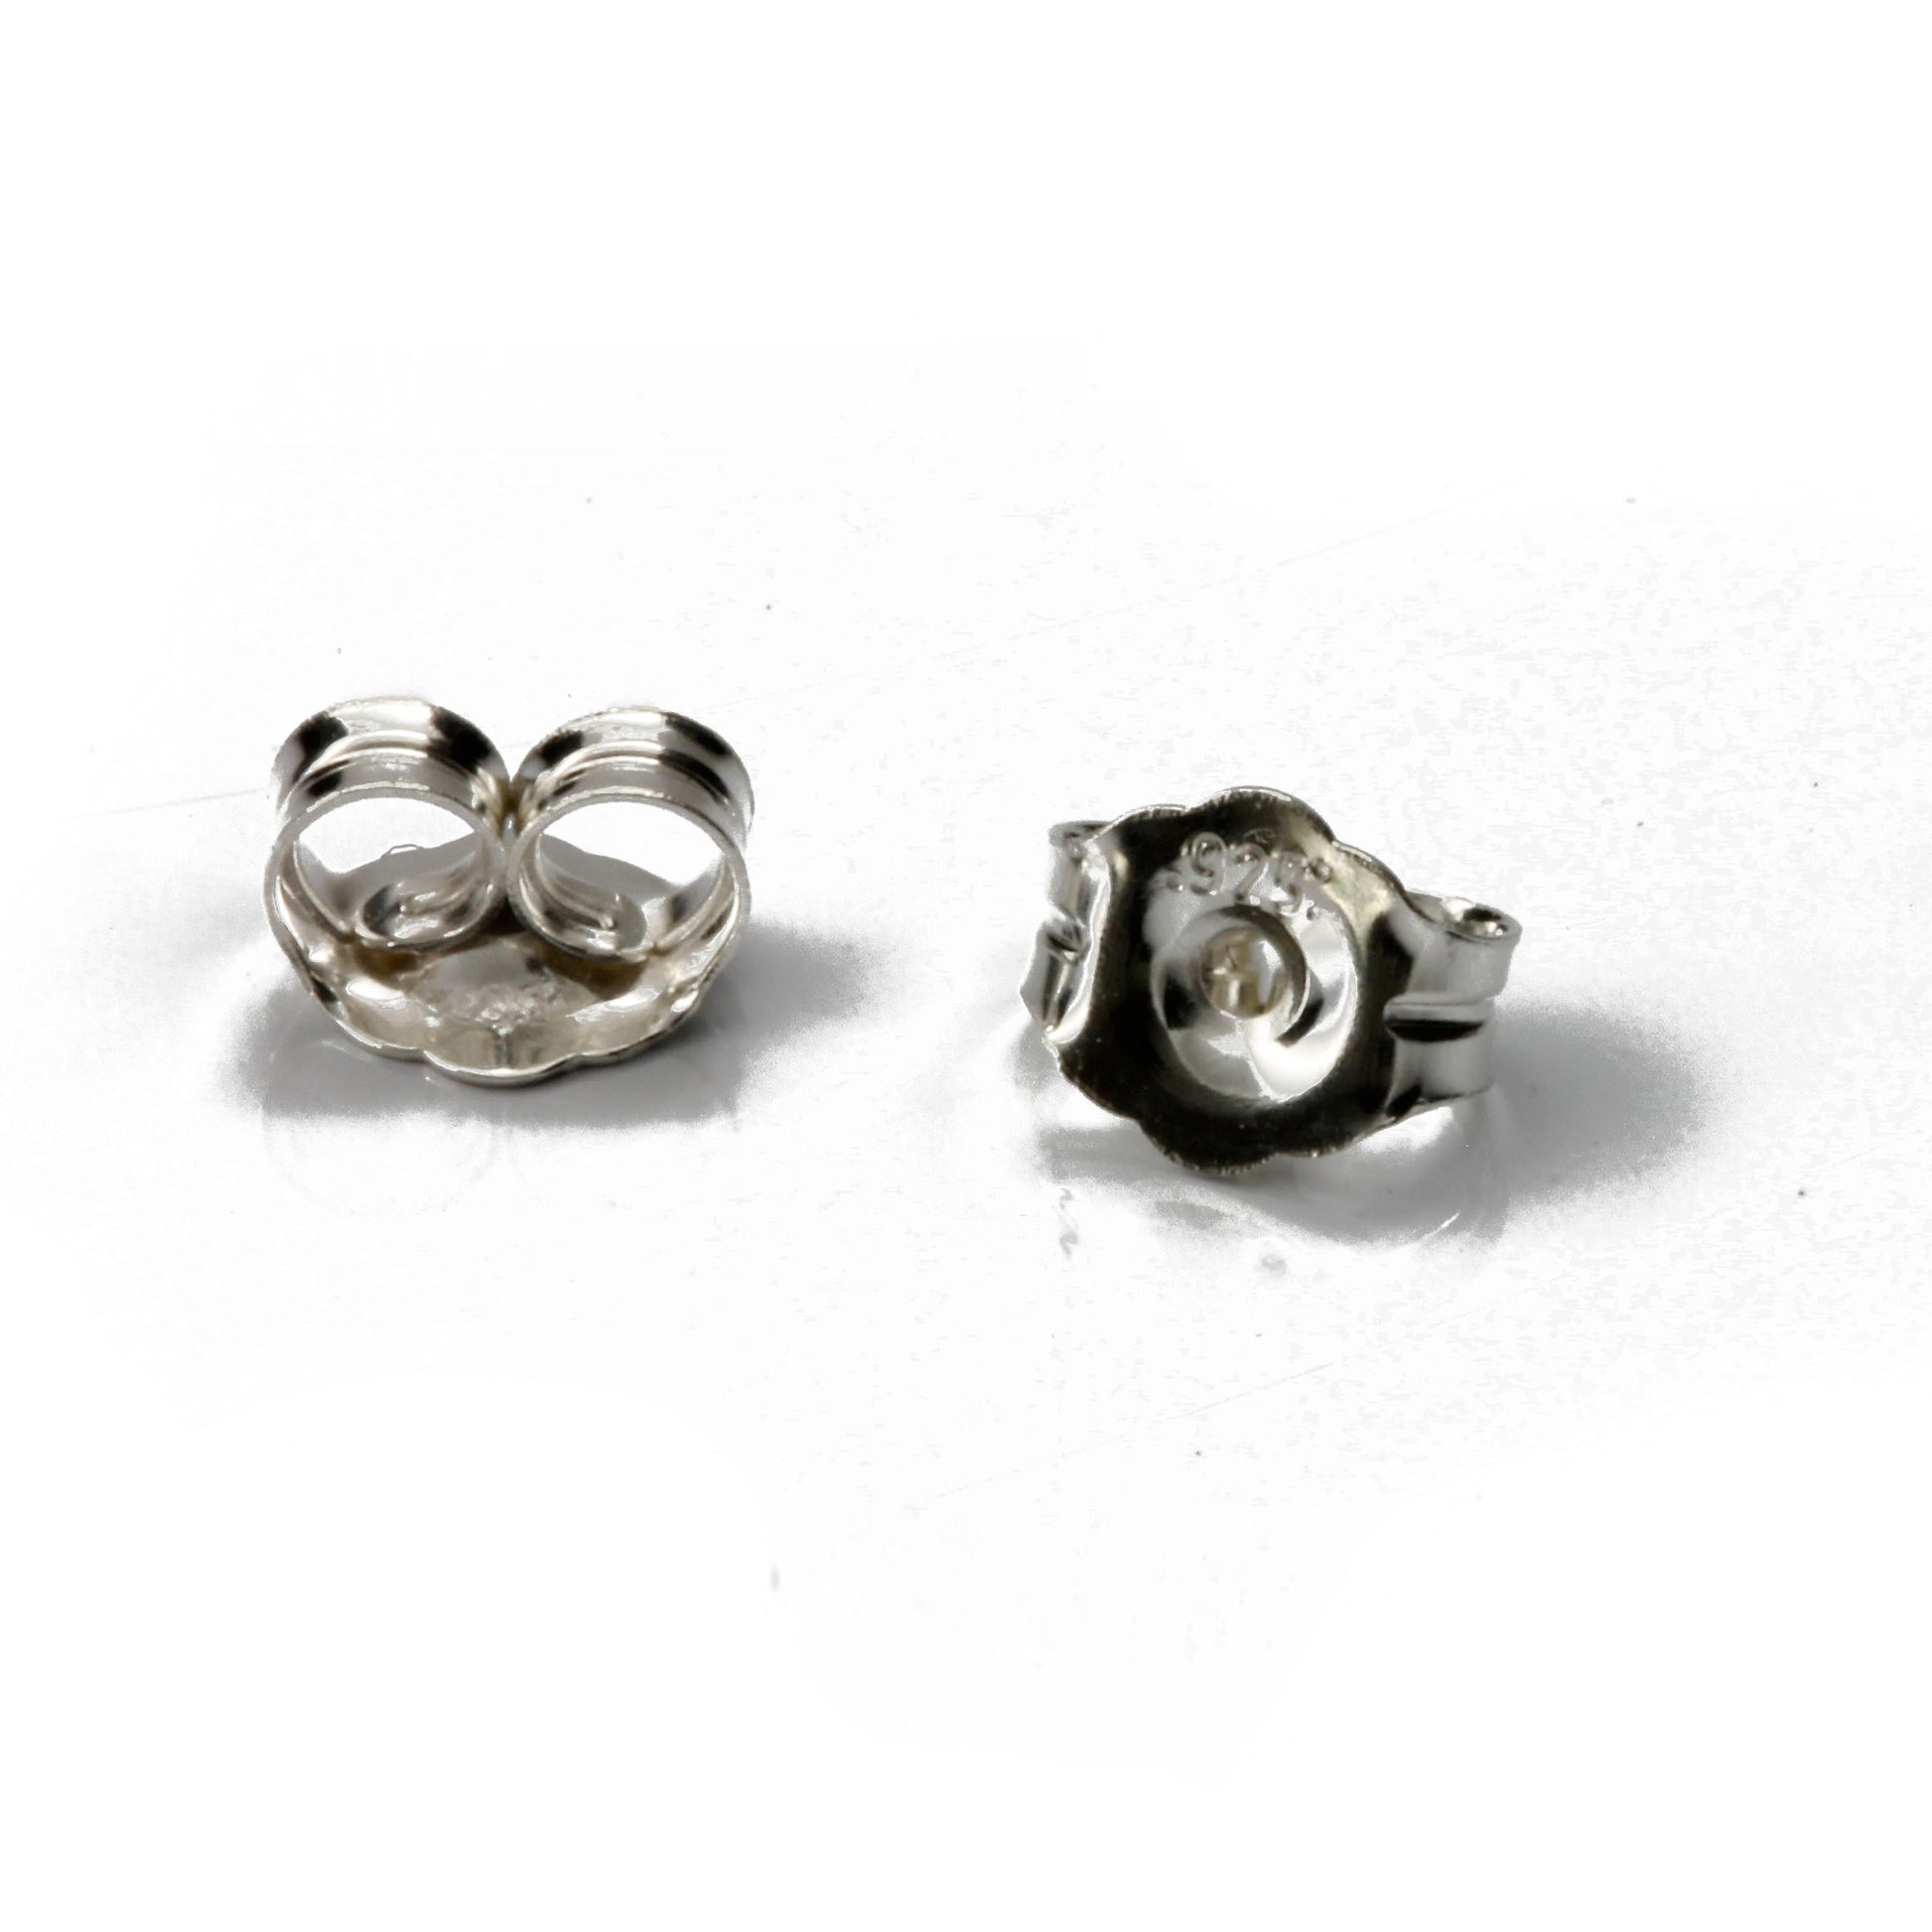 Jewelry Findings  2 Sterling Silver Pushbacks / Butterfly Backings  Friction Earring Backs – Blingschlingers Jewelry